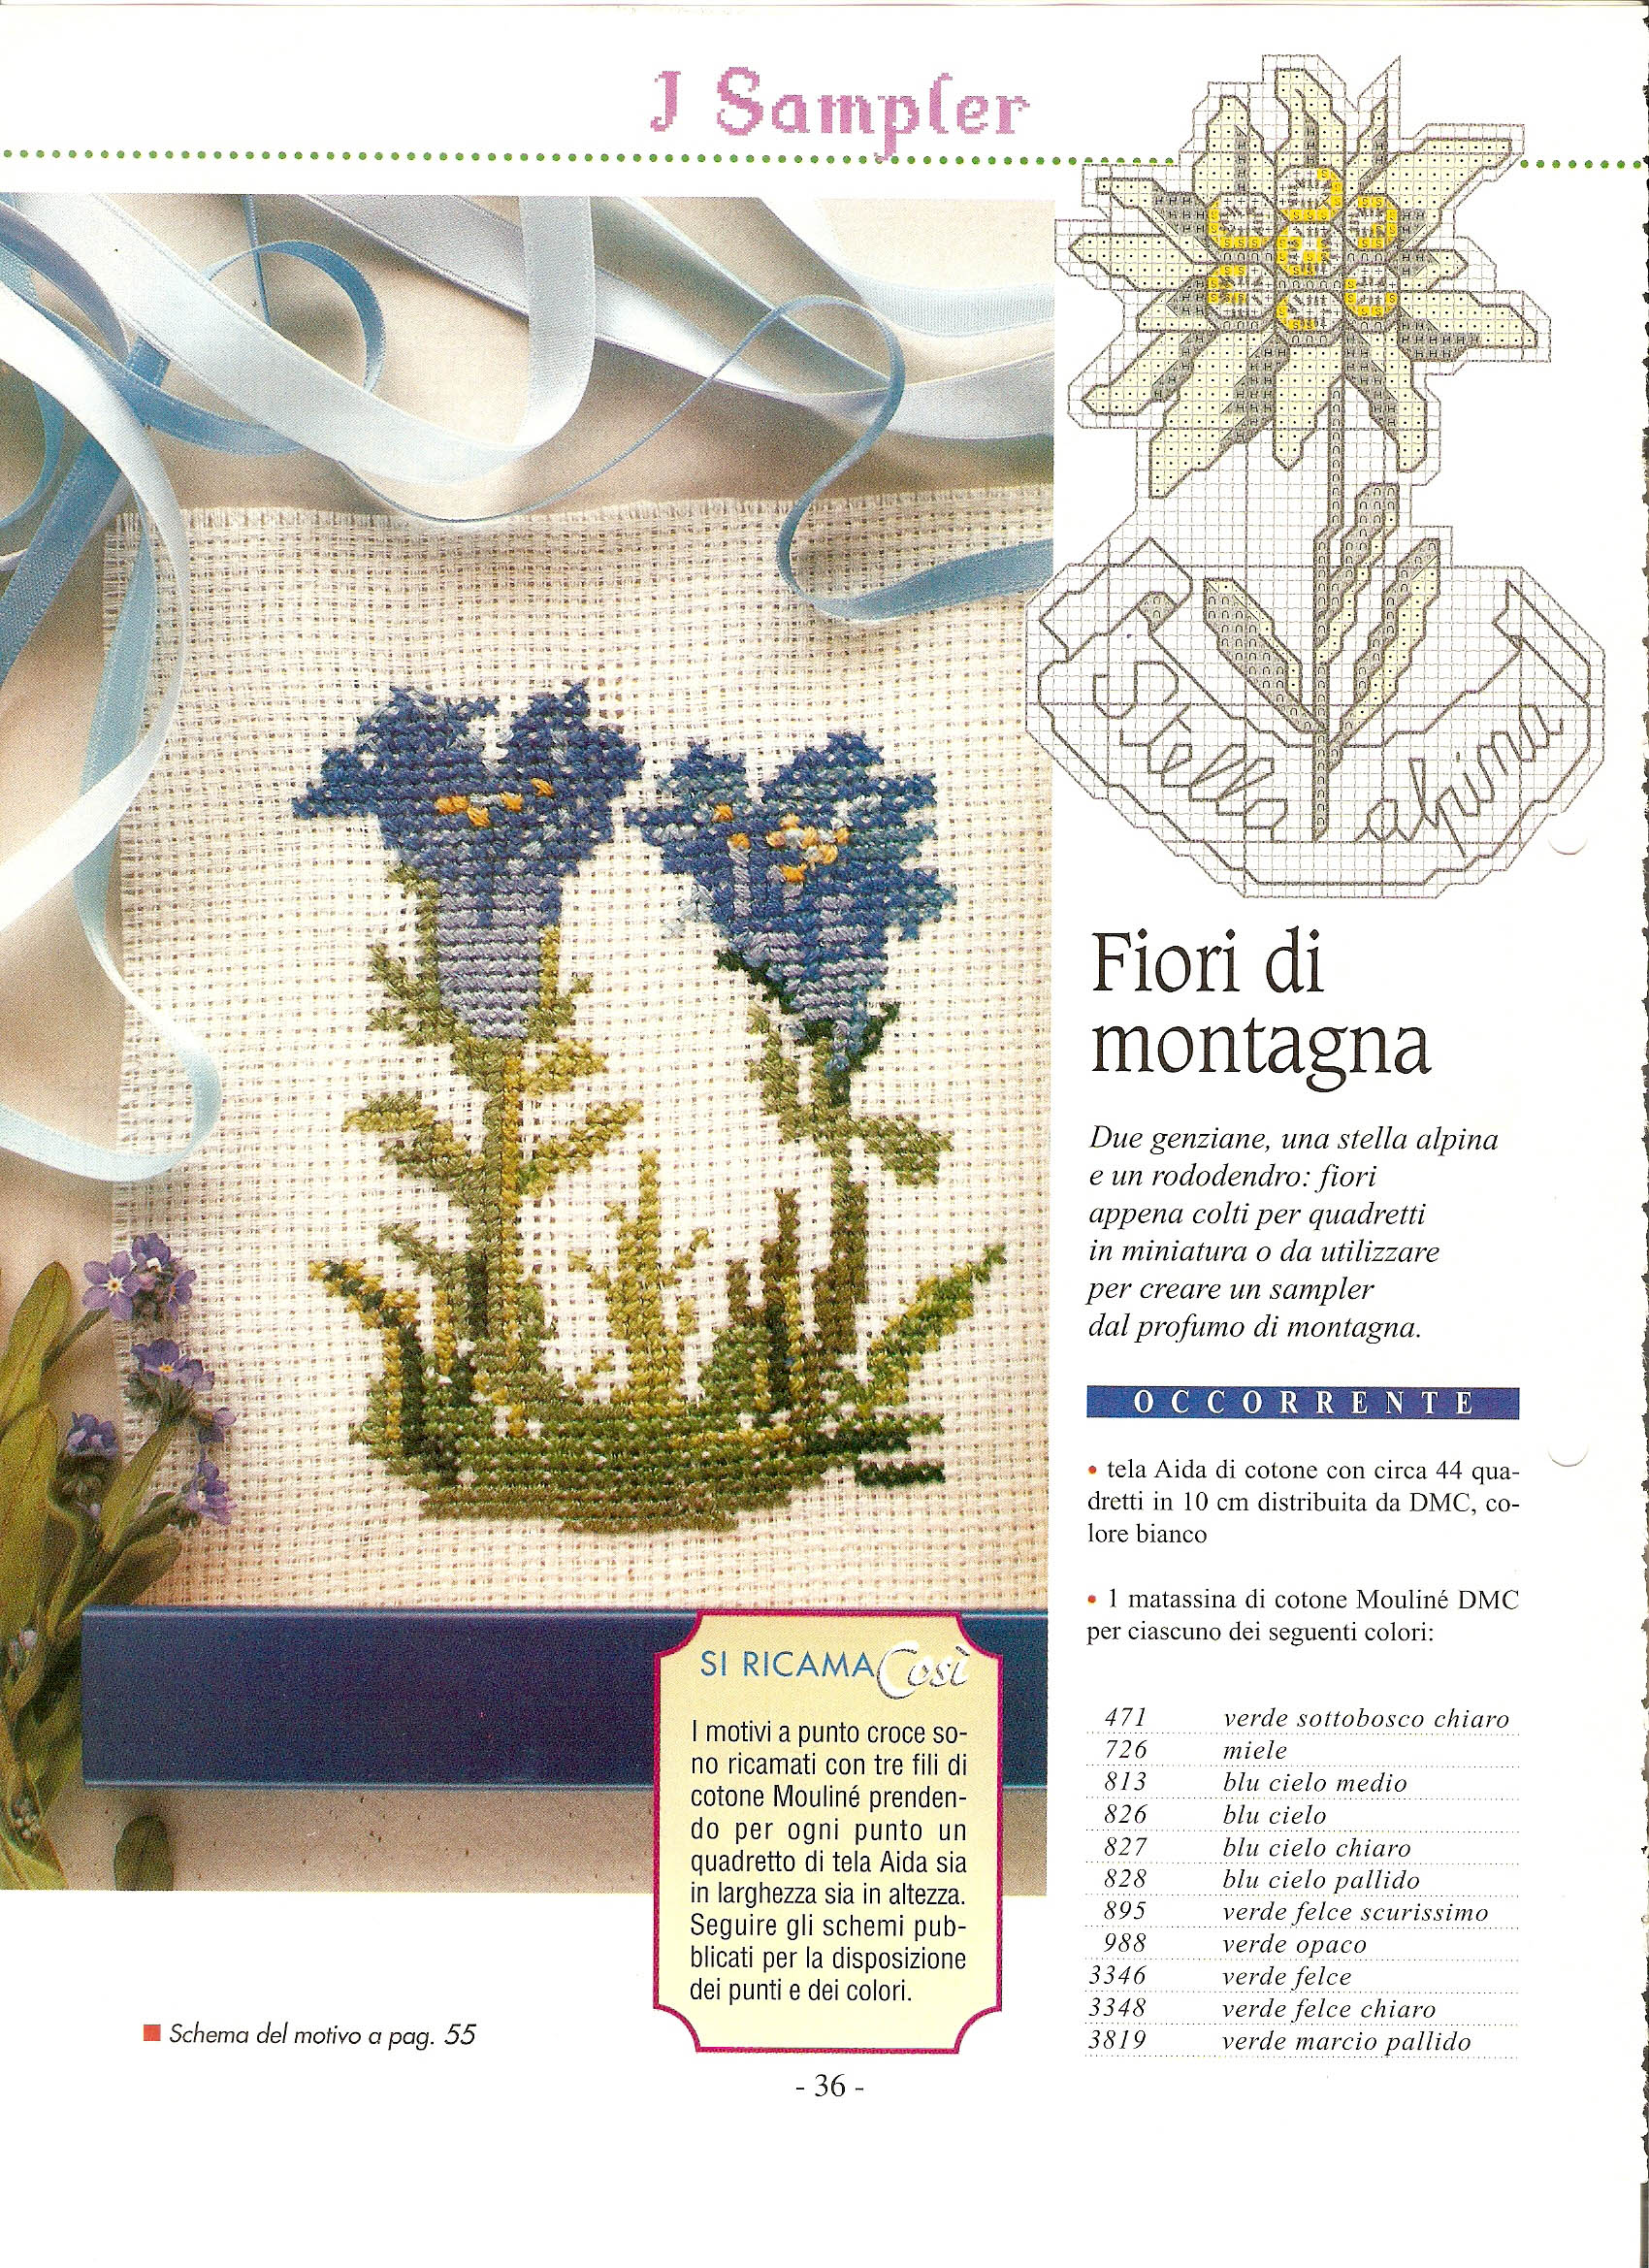 Cross stitch sampler with wildflowers (1)